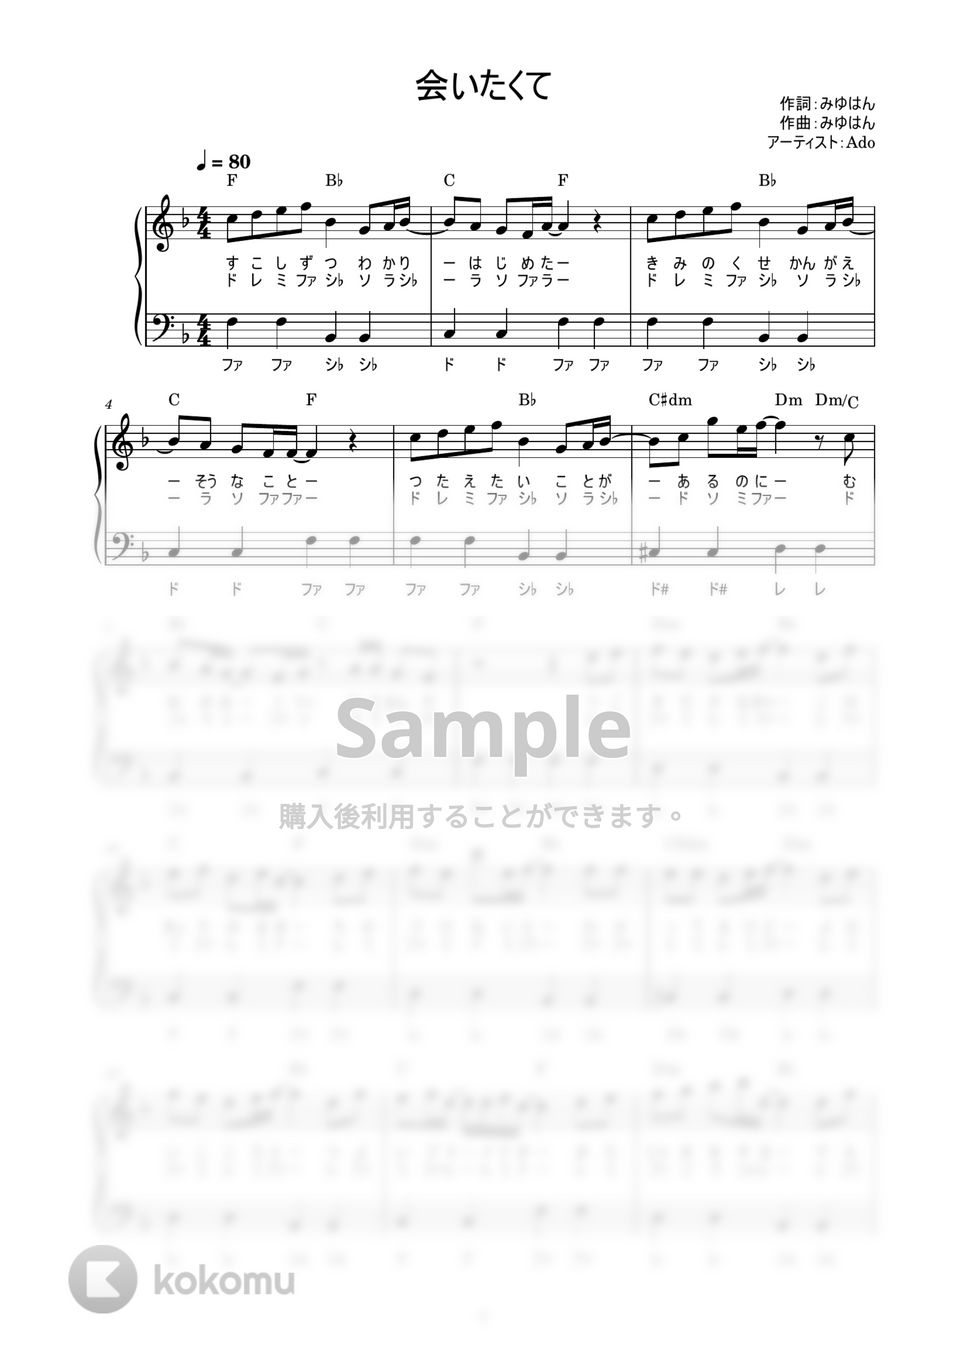 Ado - 会いたくて (かんたん / 歌詞付き / ドレミ付き / 初心者) by piano.tokyo